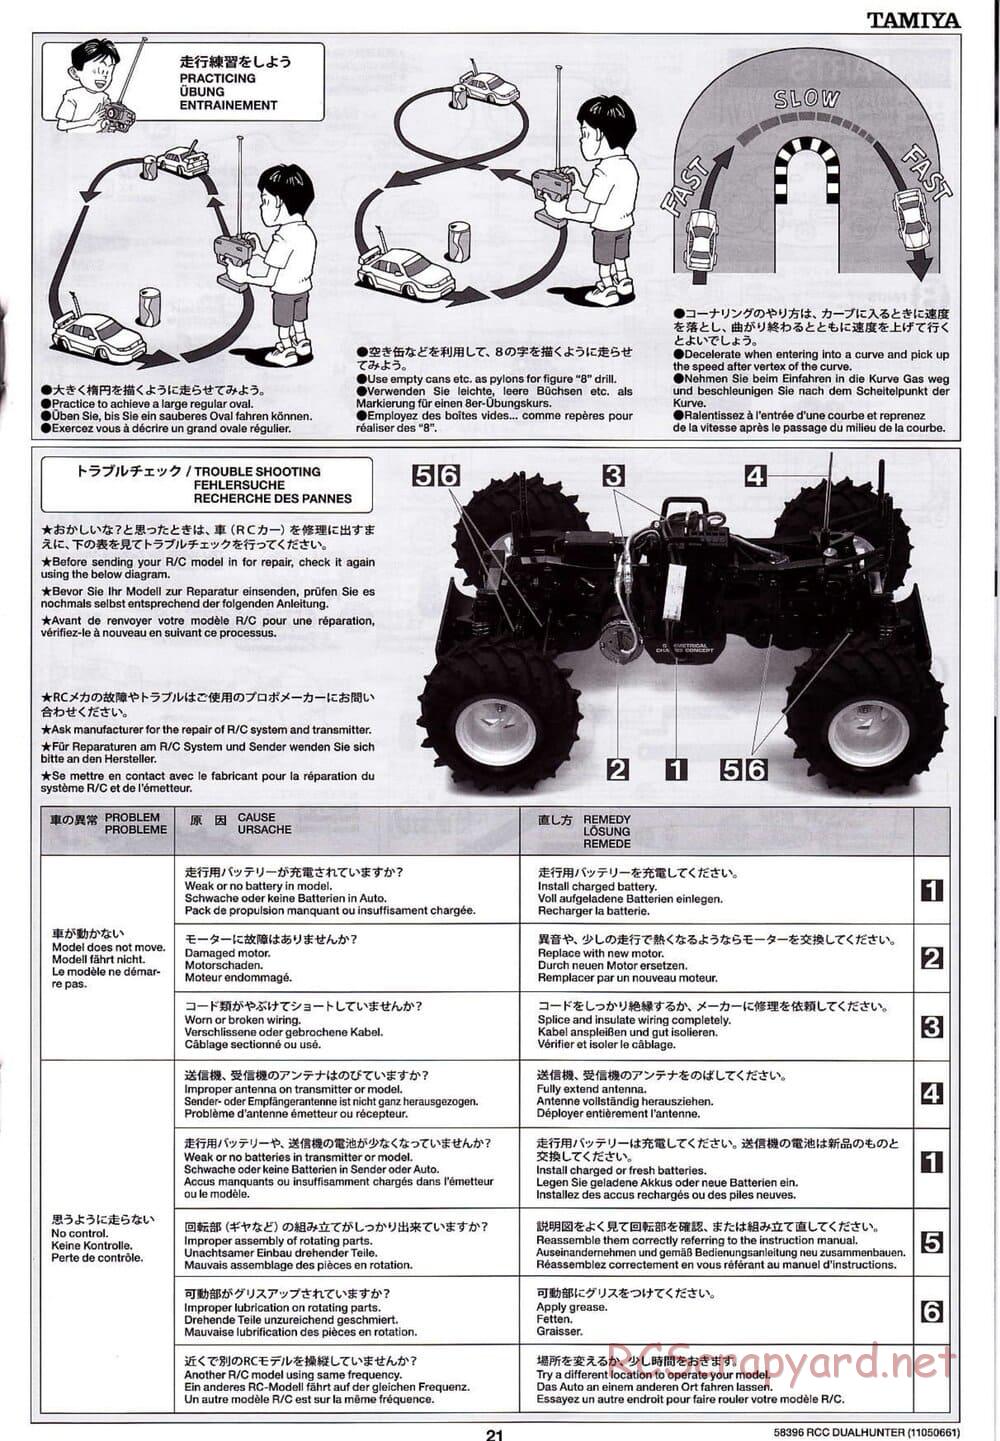 Tamiya - Dualhunter - WR-01 Chassis - Manual - Page 21